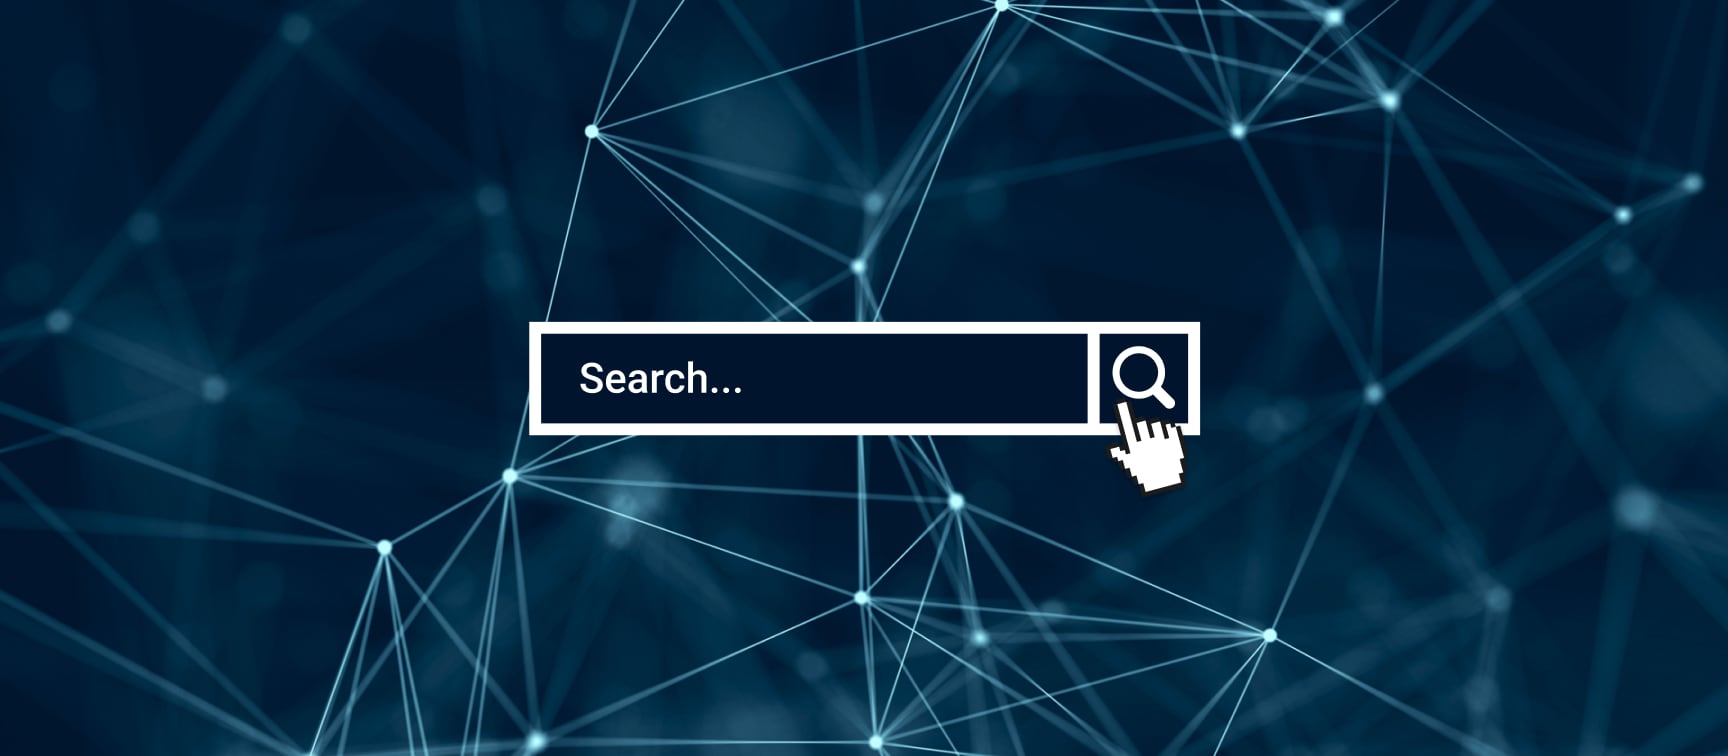 the darknet search engine mega